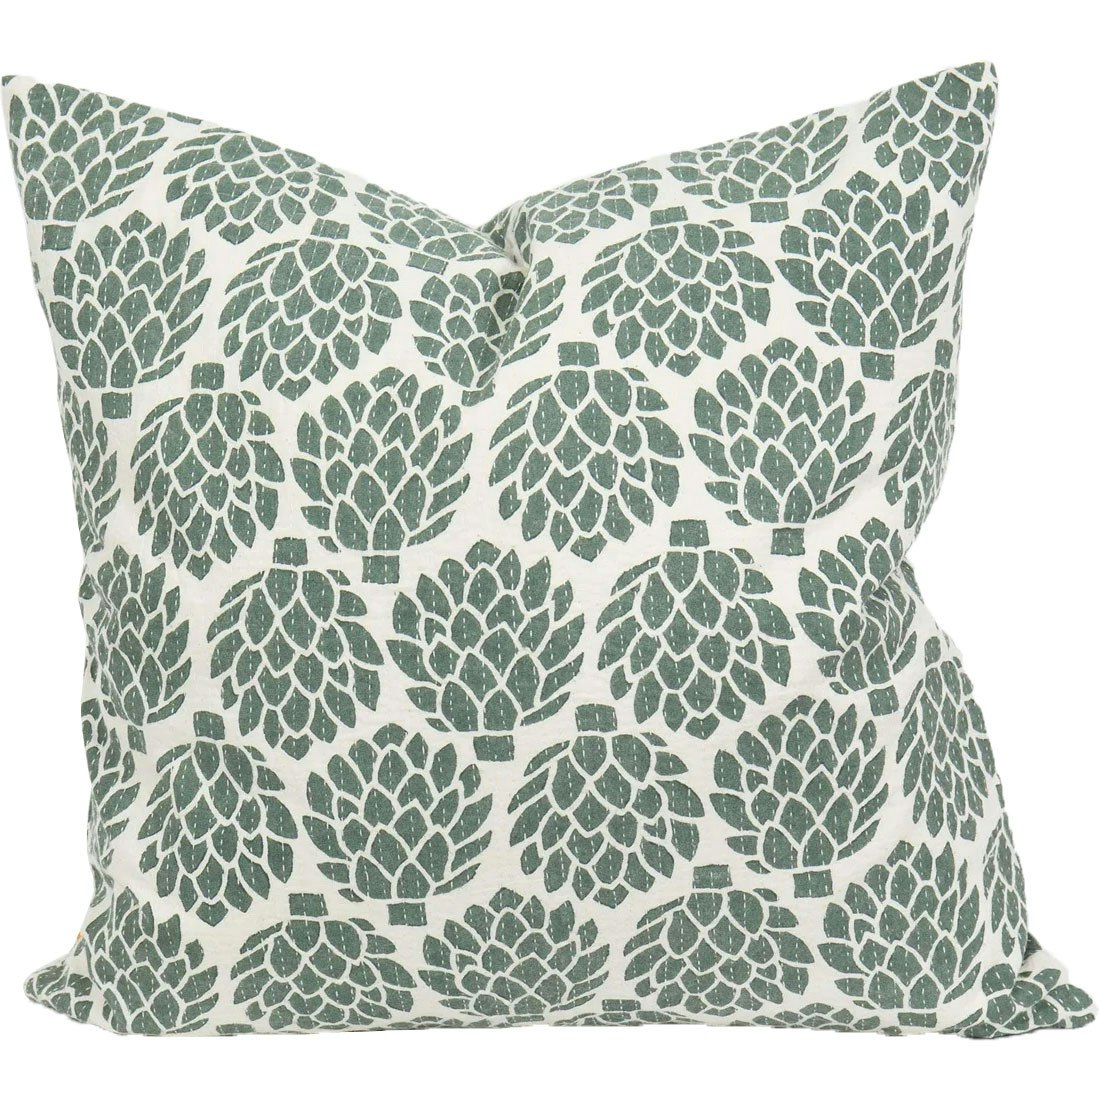 Artichoke Cushion Cover 50x50 cm, Green Grey